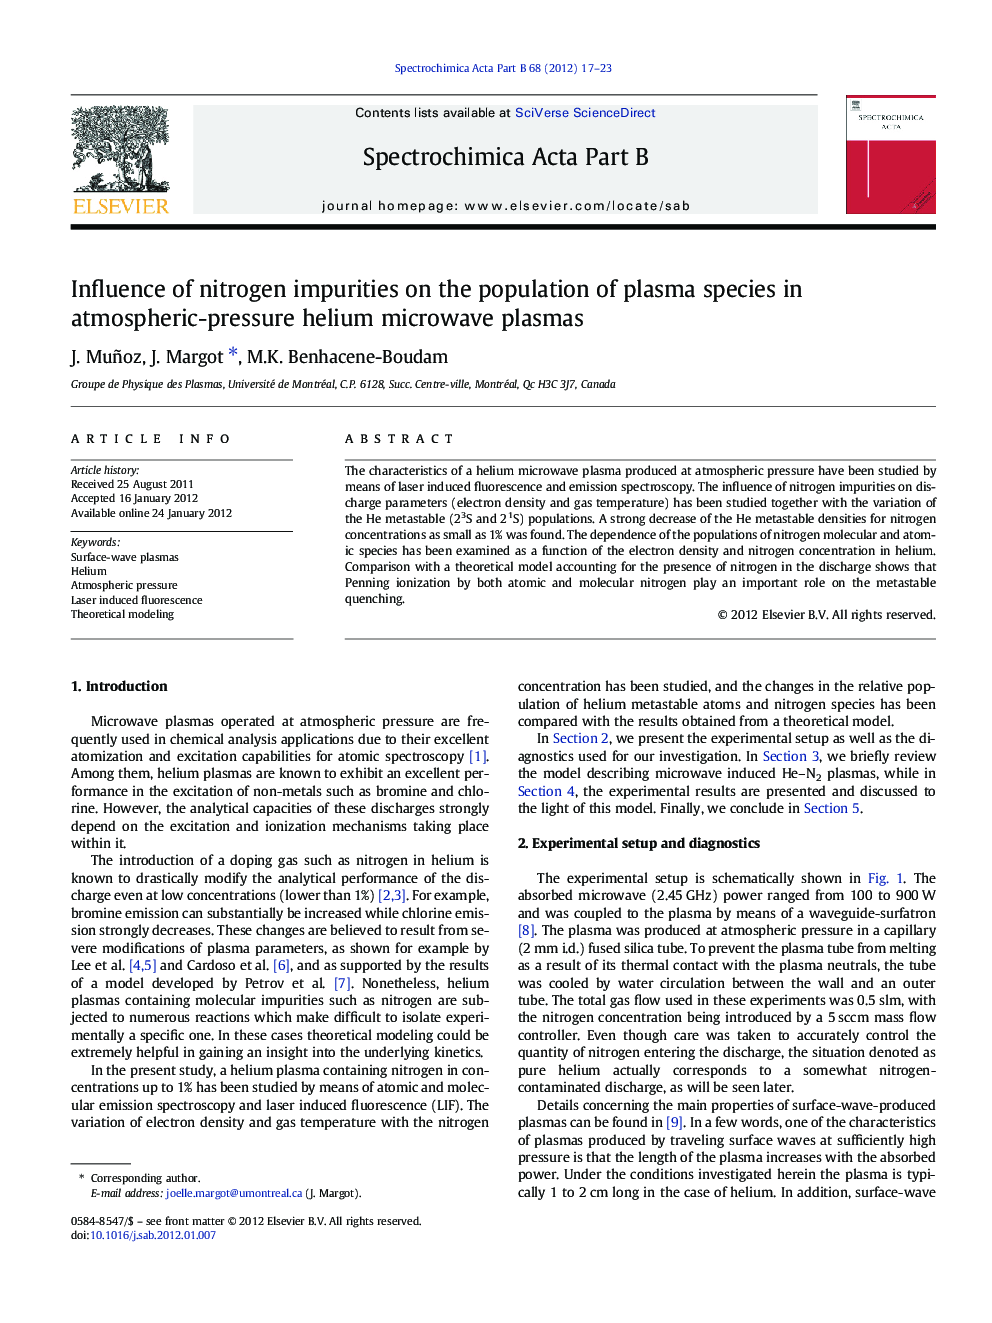 Influence of nitrogen impurities on the population of plasma species in atmospheric-pressure helium microwave plasmas